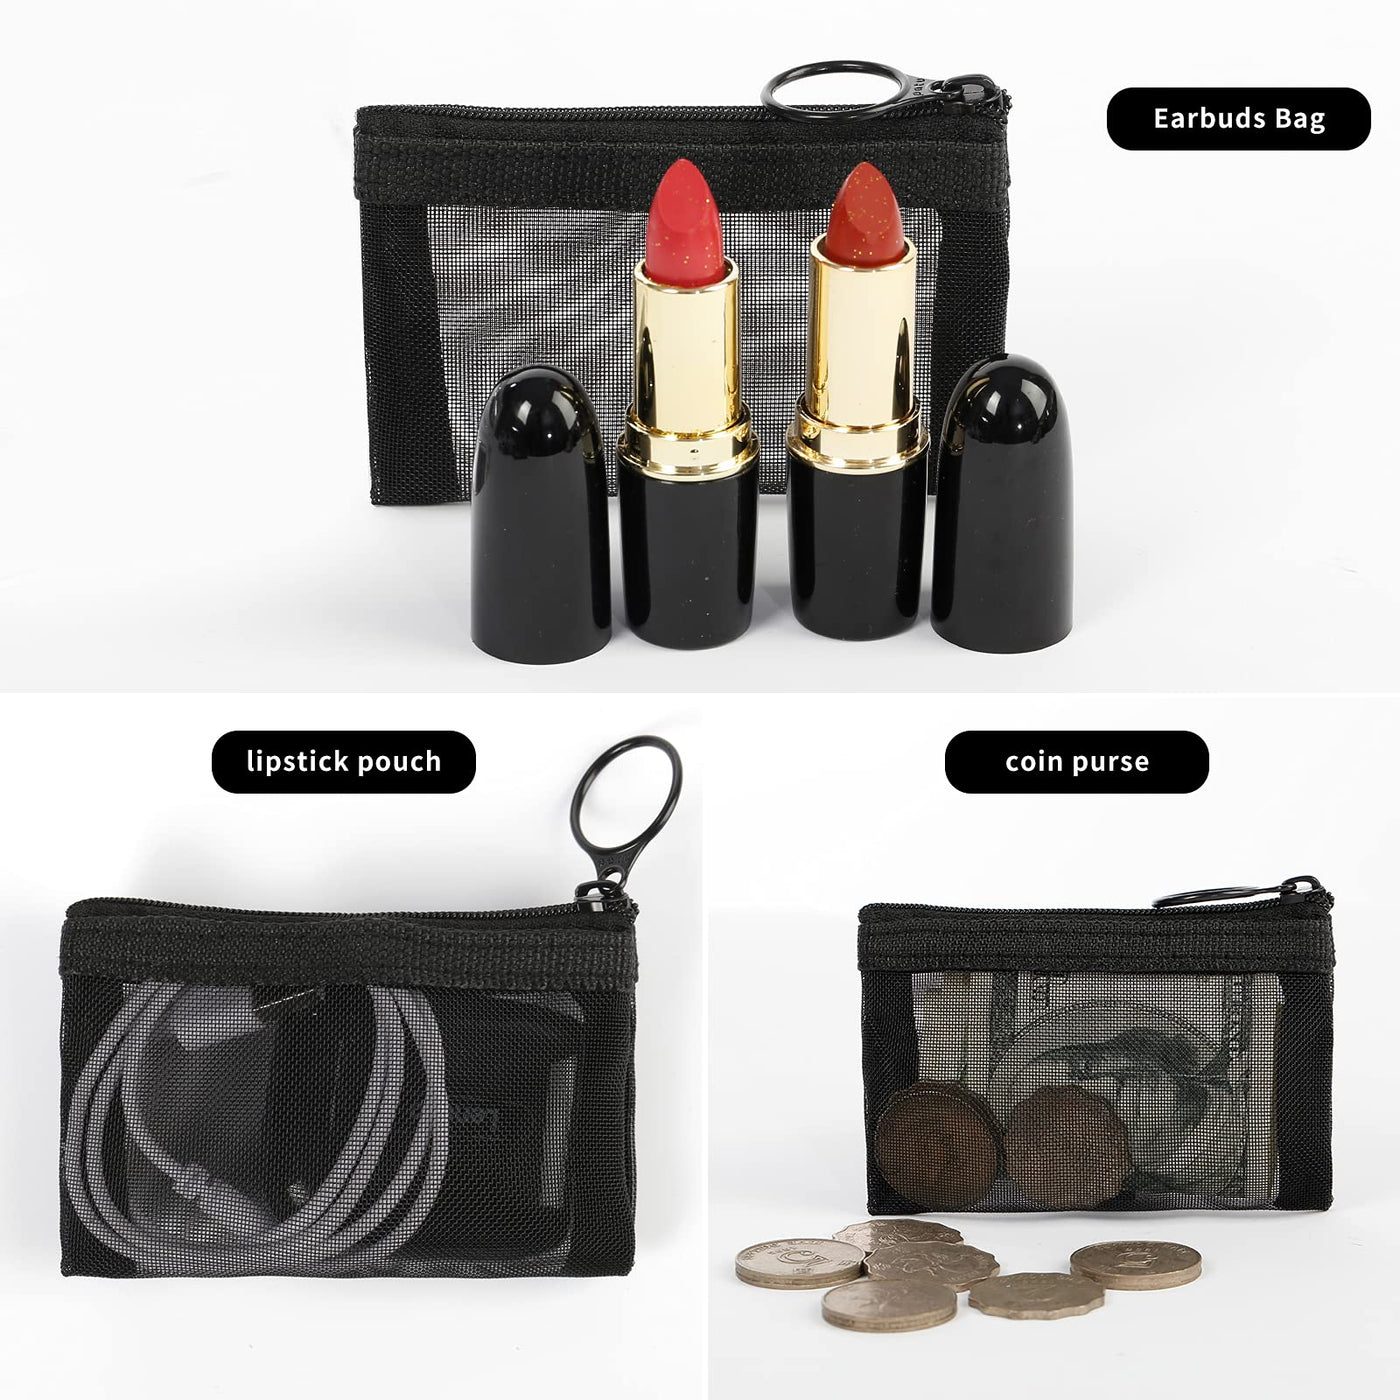 Patu Mini Zipper Mesh Bags, 4 inch x 5 inch, Size S / A7, 5 Pieces, Beauty Makeup Lipstick Cosmetic Accessories Organizer, Small Travel Kit Storage